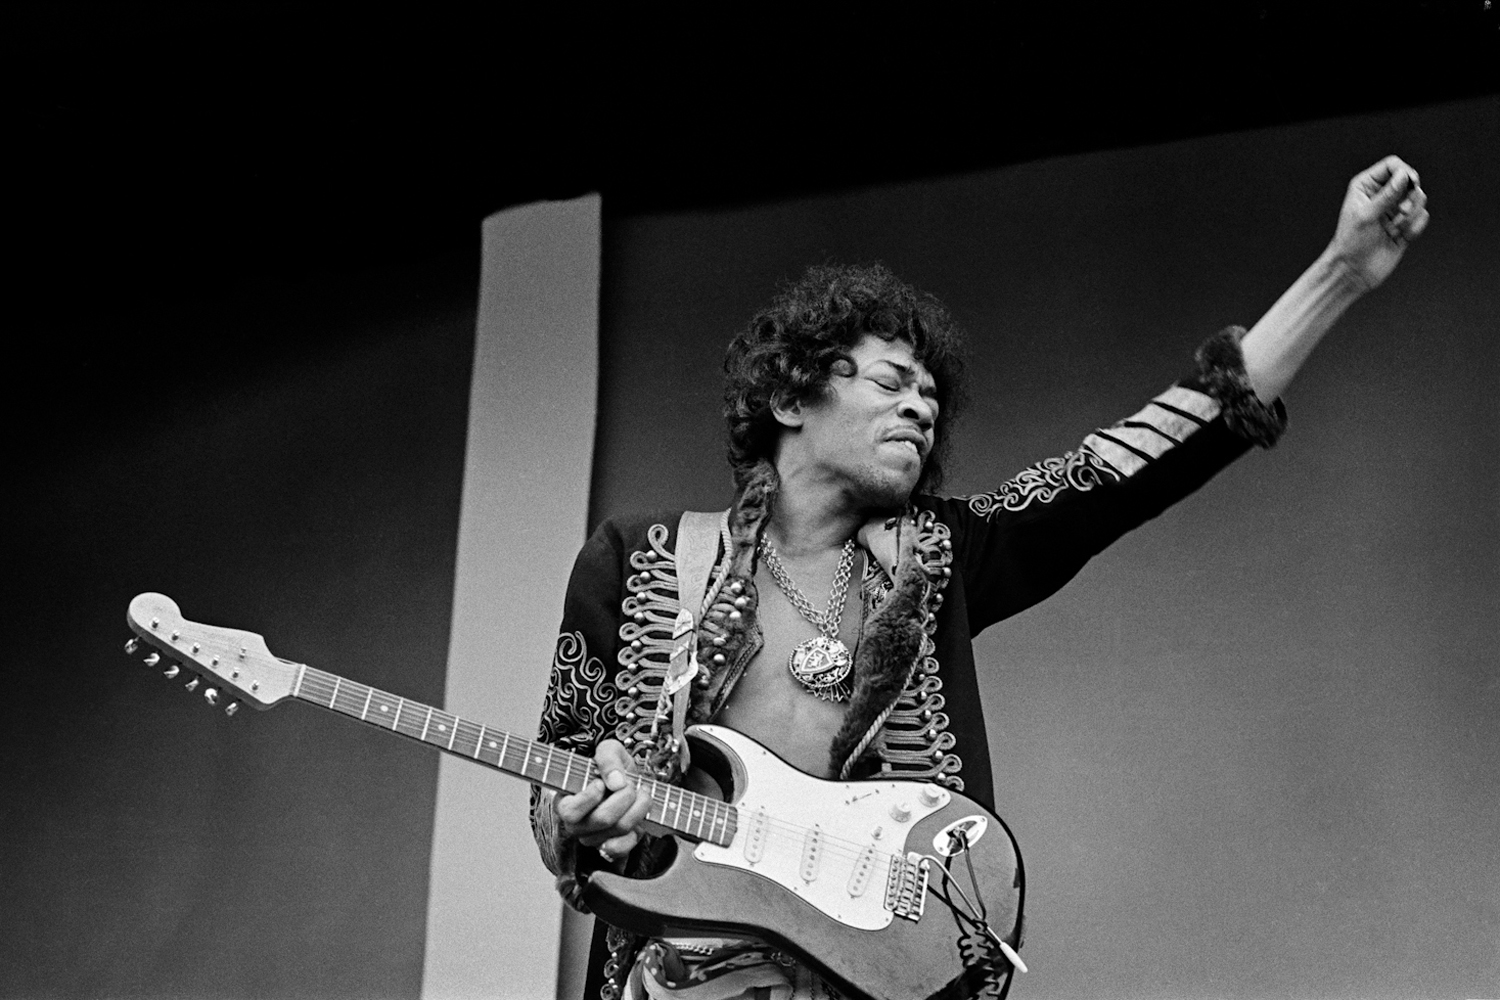 Image: Jimi Hendrix sound check at Monterey Pop Festival, 1967